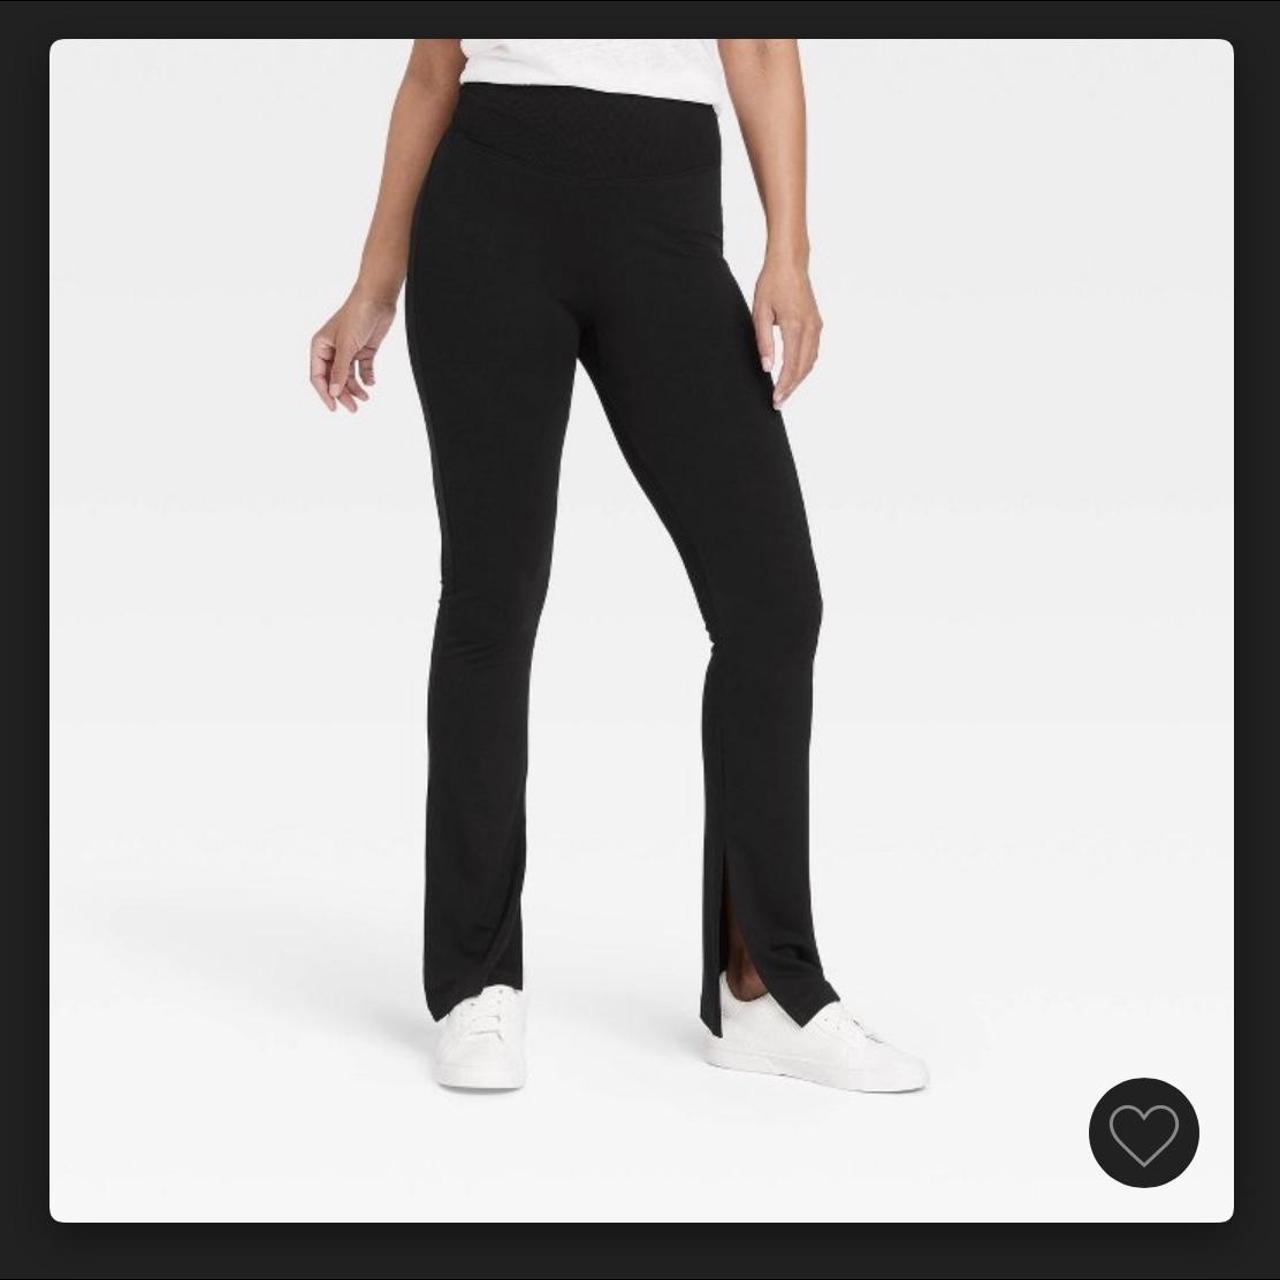 Yoga Pants Straight Leg : Target